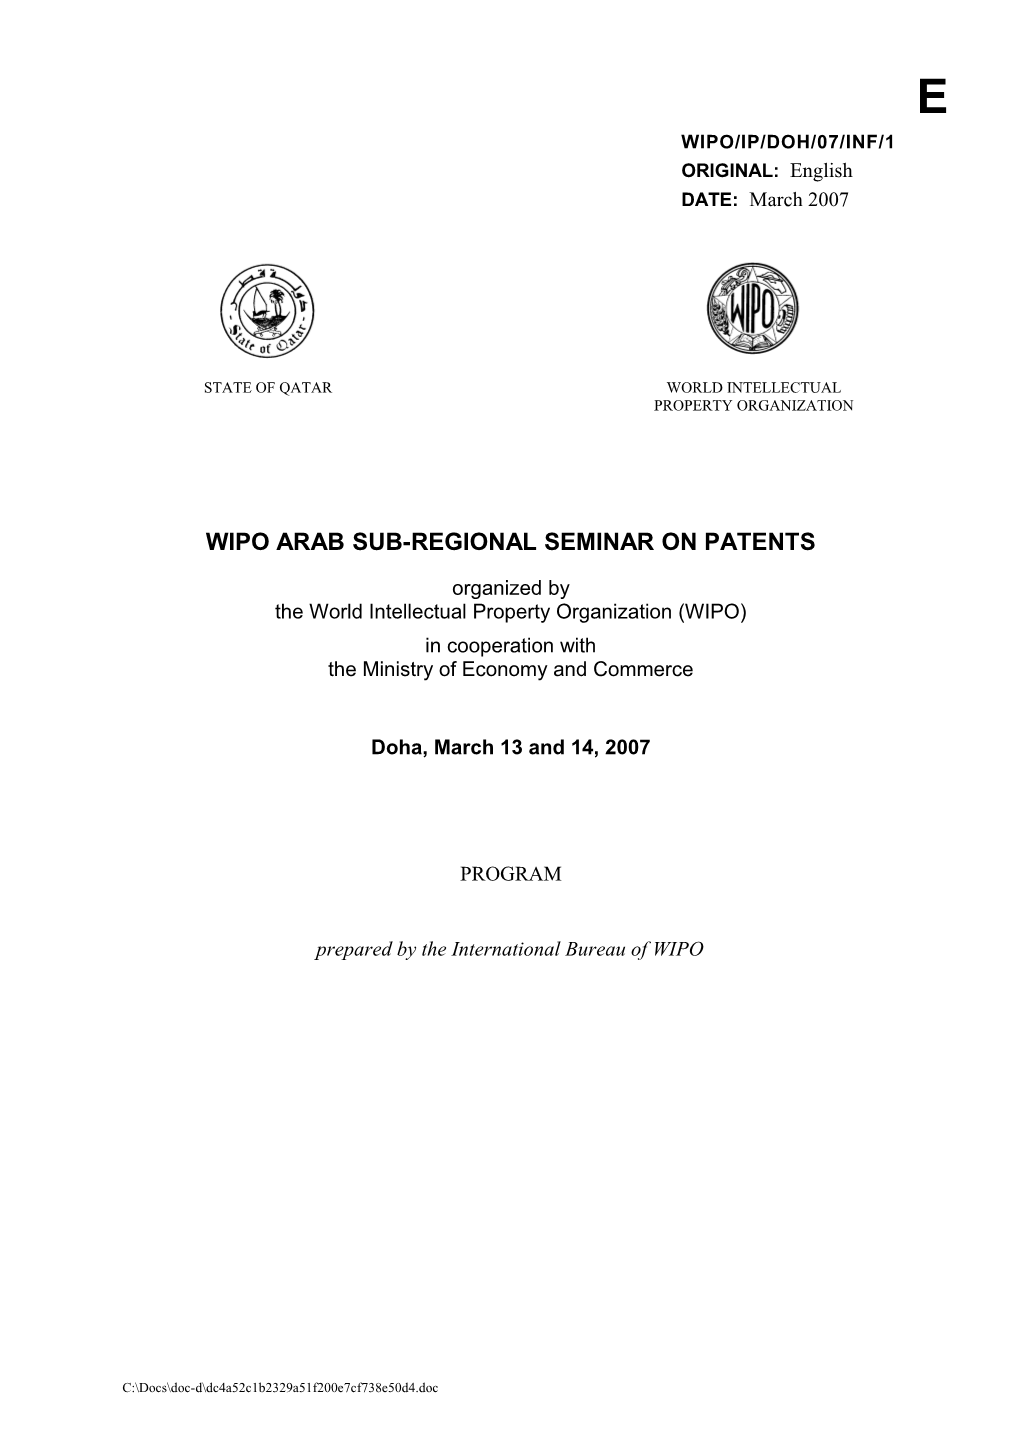 WIPO/IP/DOH/07/INF/1: Program